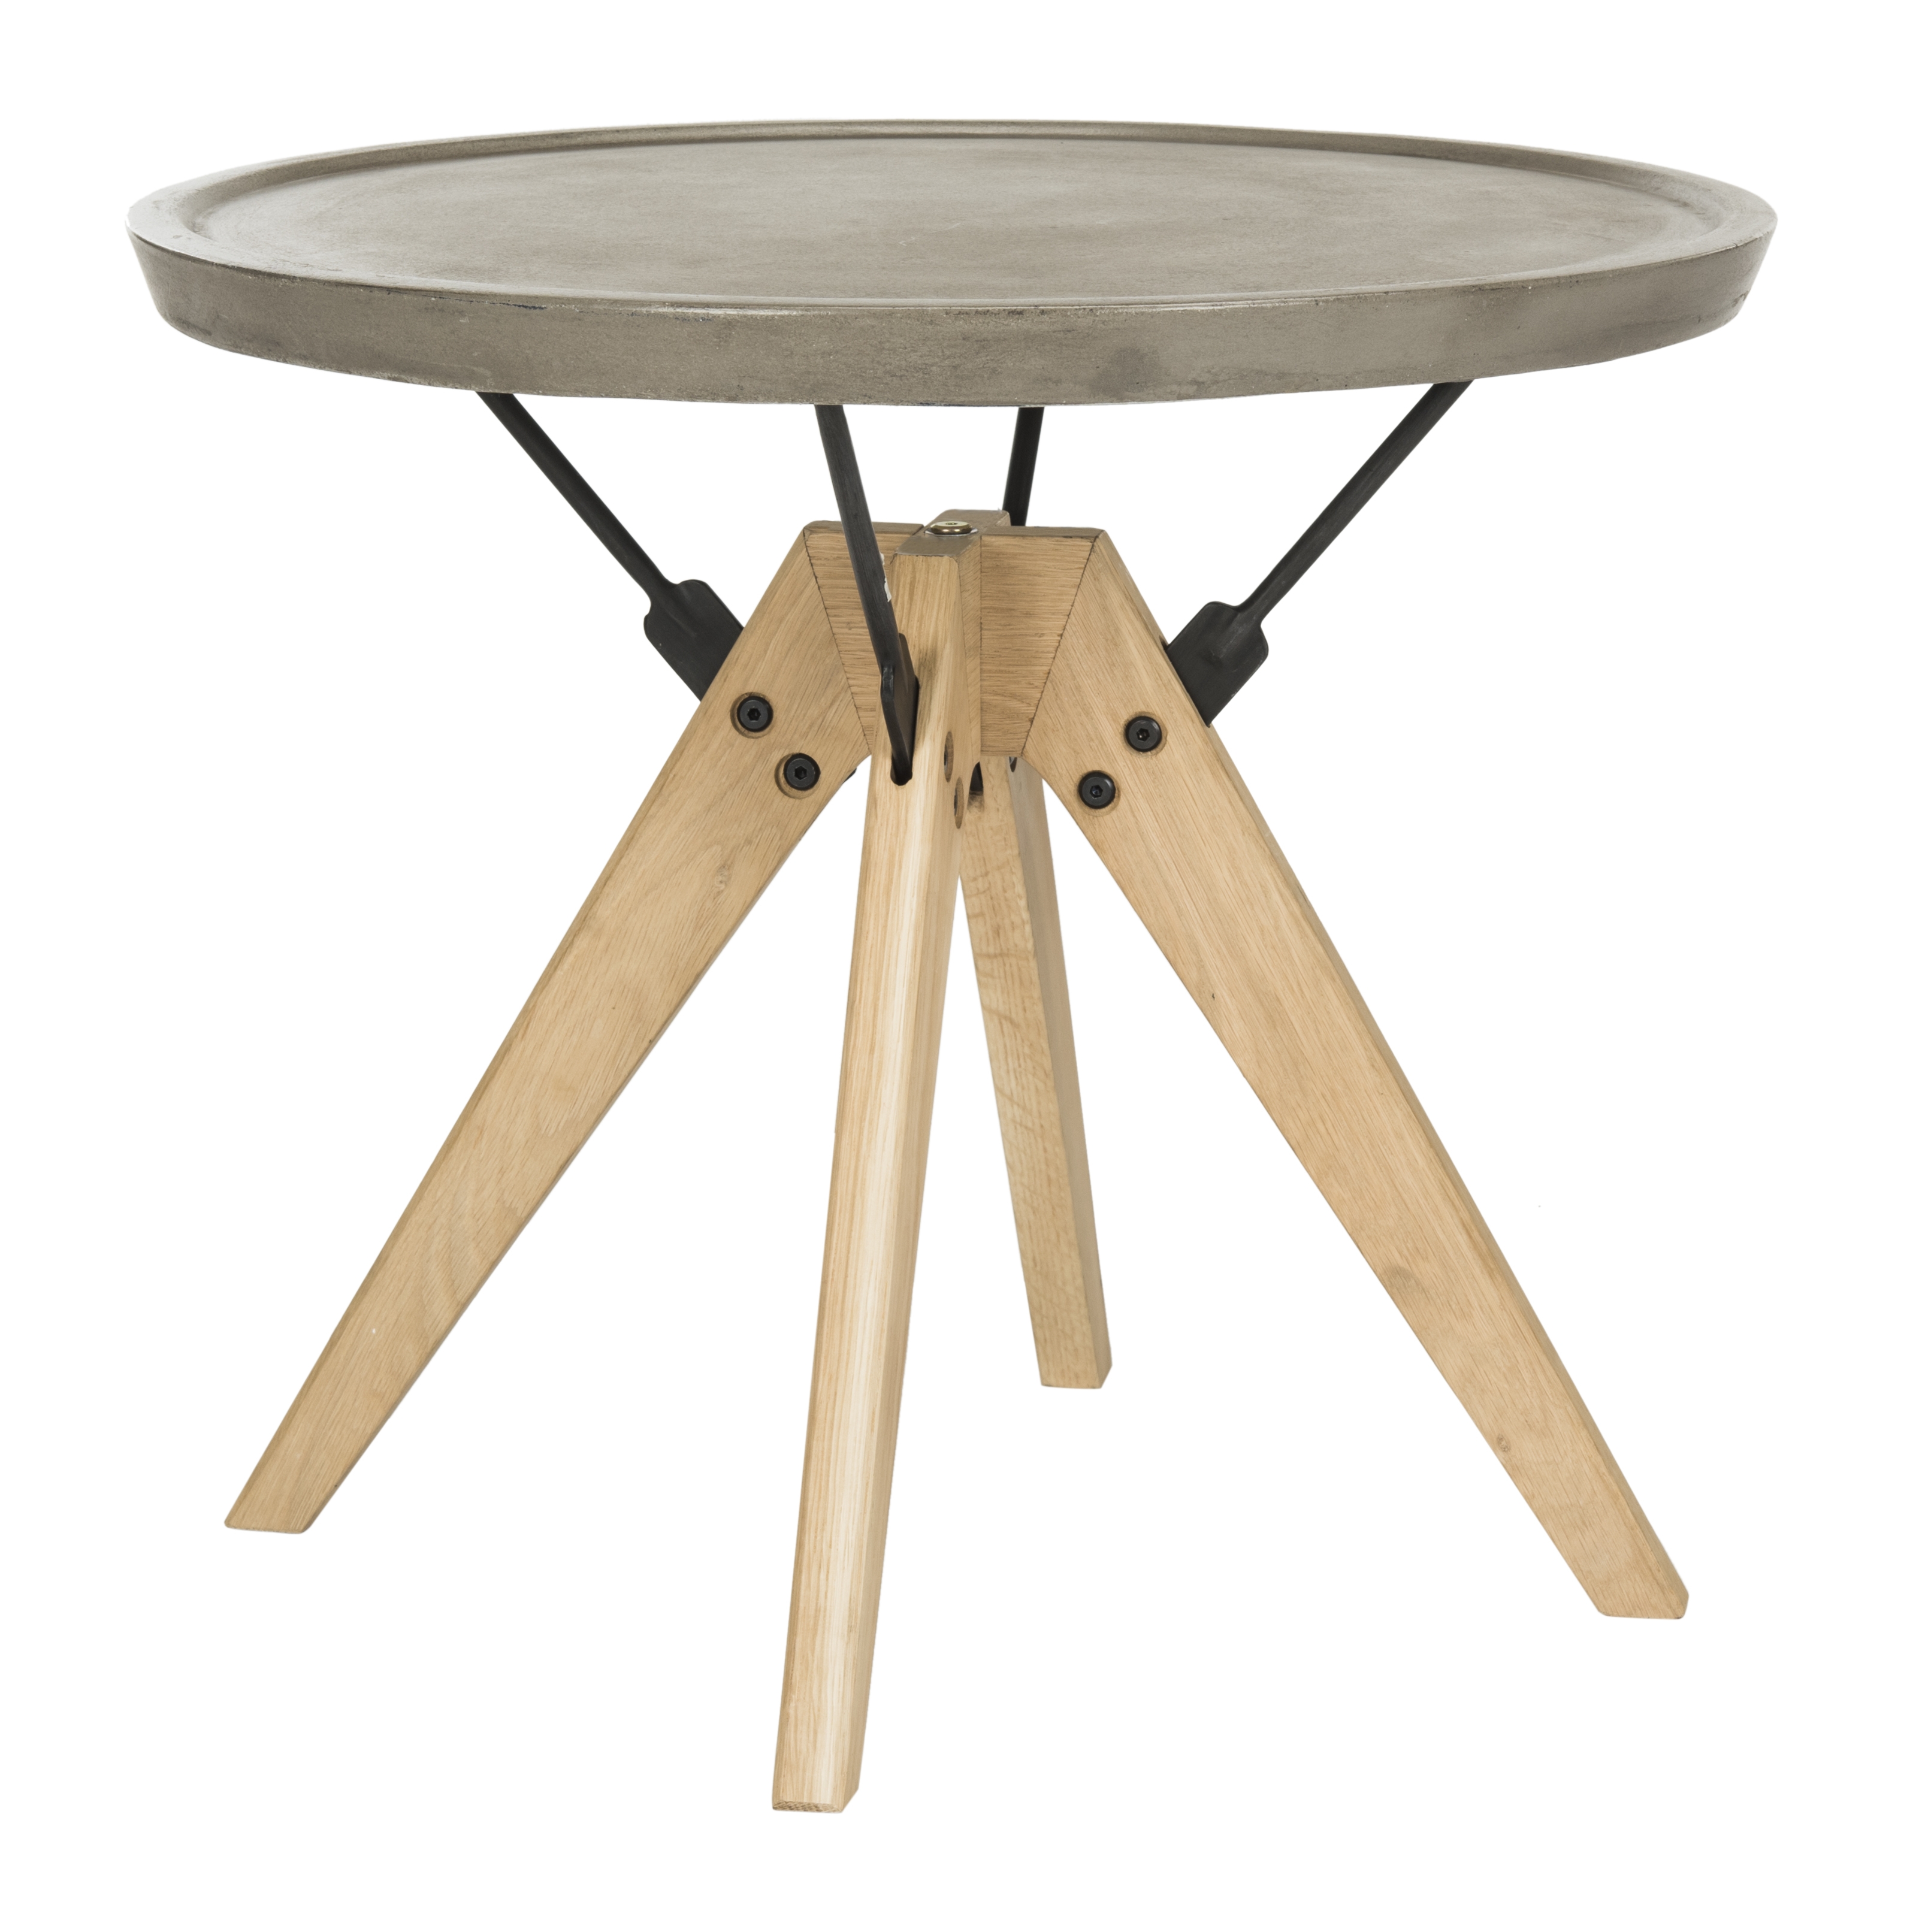 Farmond Concrete Side Table, Gray - Image 2